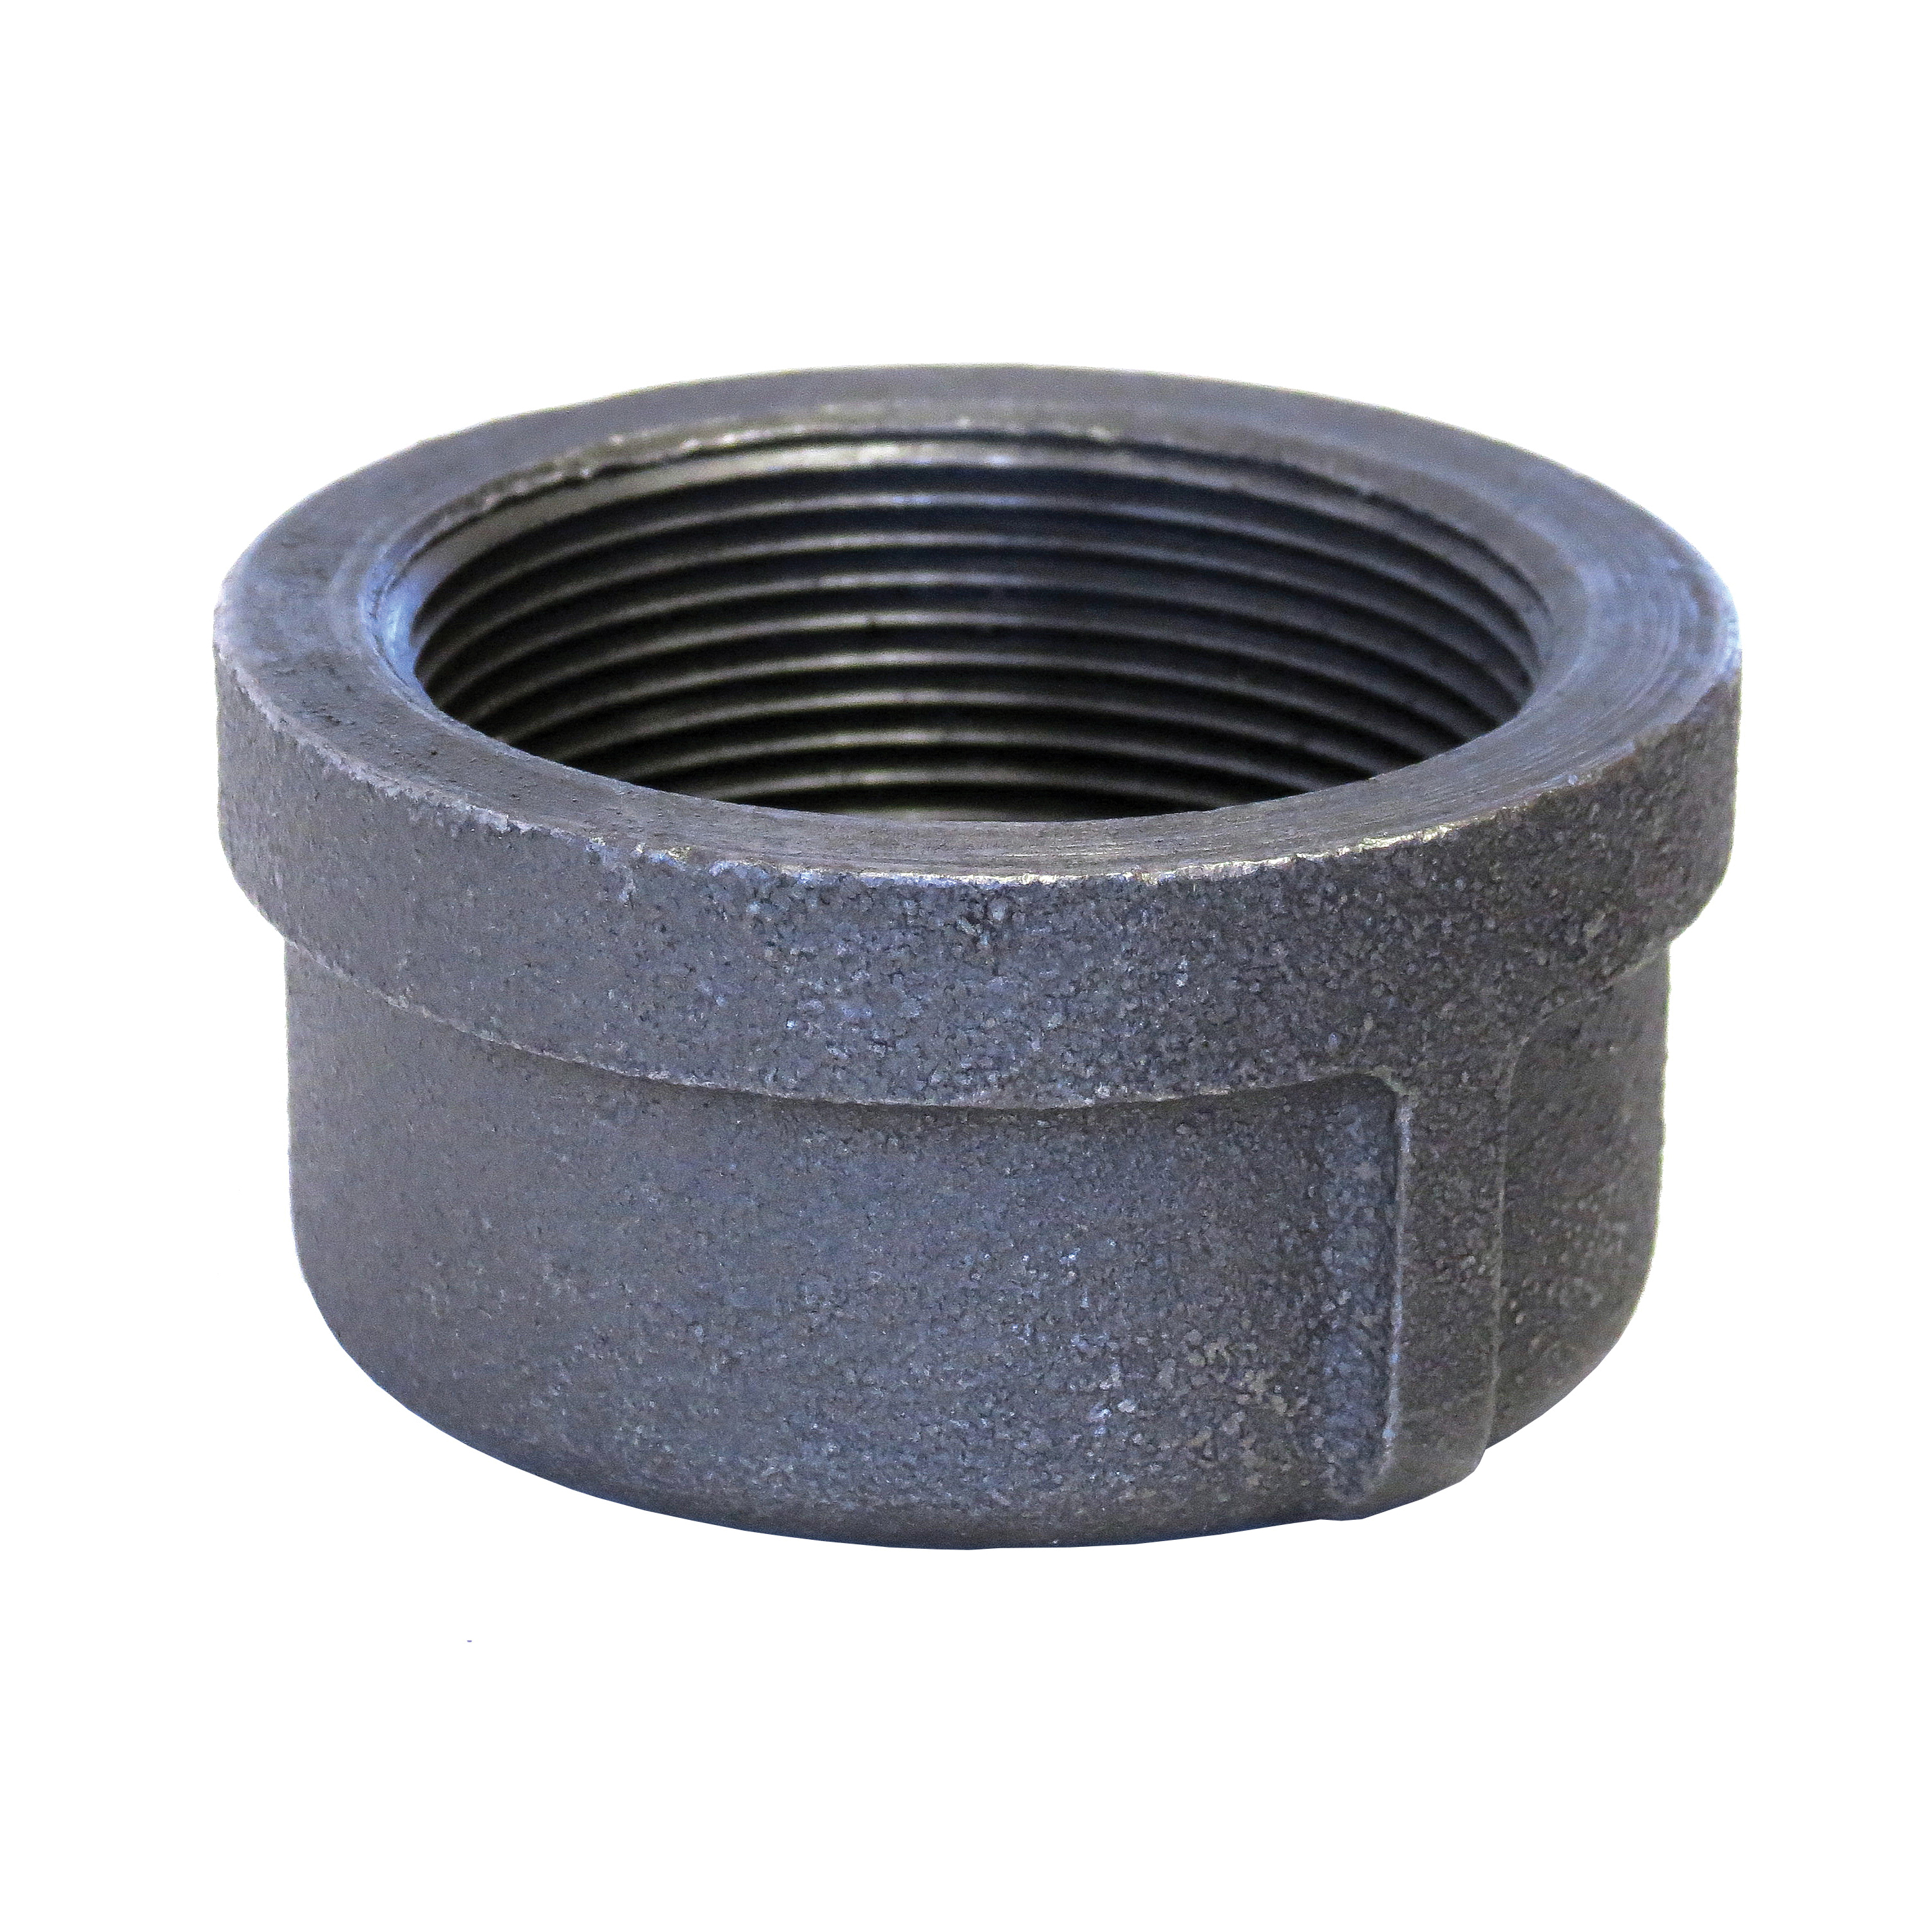 Anvil® 0318900040 Pipe Cap, 1/4 in Nominal, FNPT End Style, 150 lb, Merchant Steel, Black Oxide, Domestic